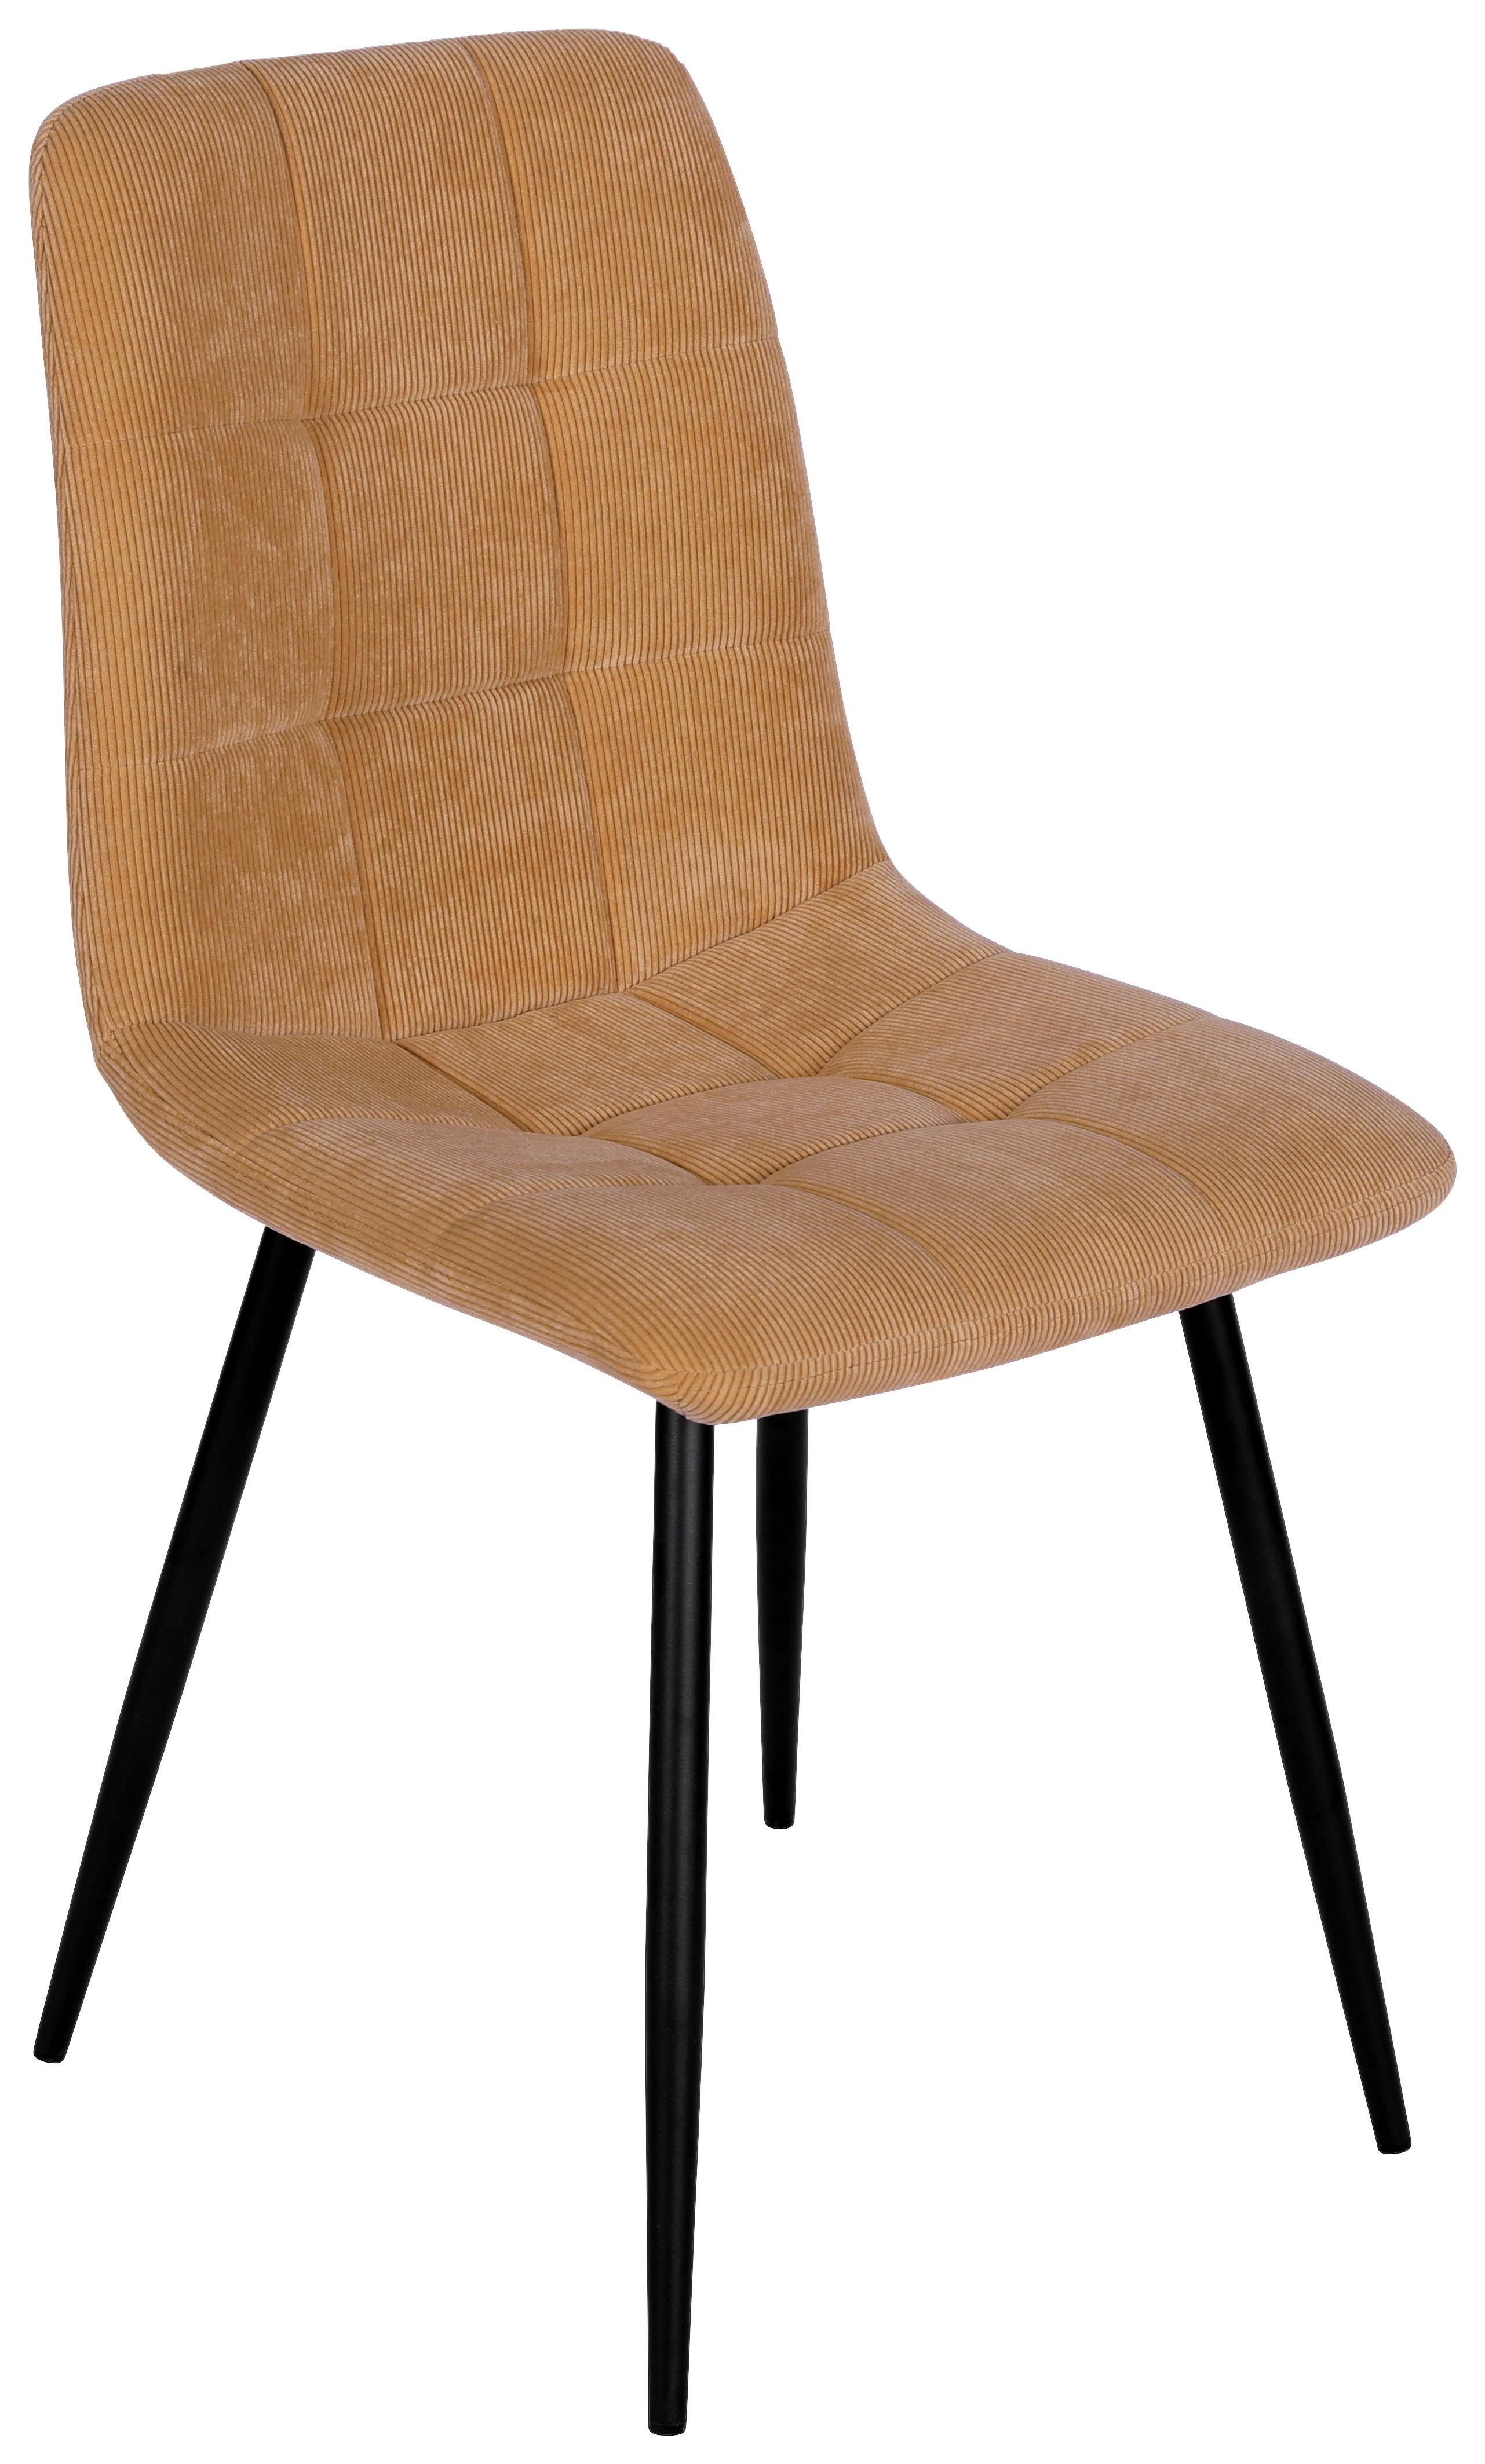 Stuhl aus Kord in Gelb - Gelb/Schwarz, Modern, Holz/Textil (45/87/57cm) - Modern Living